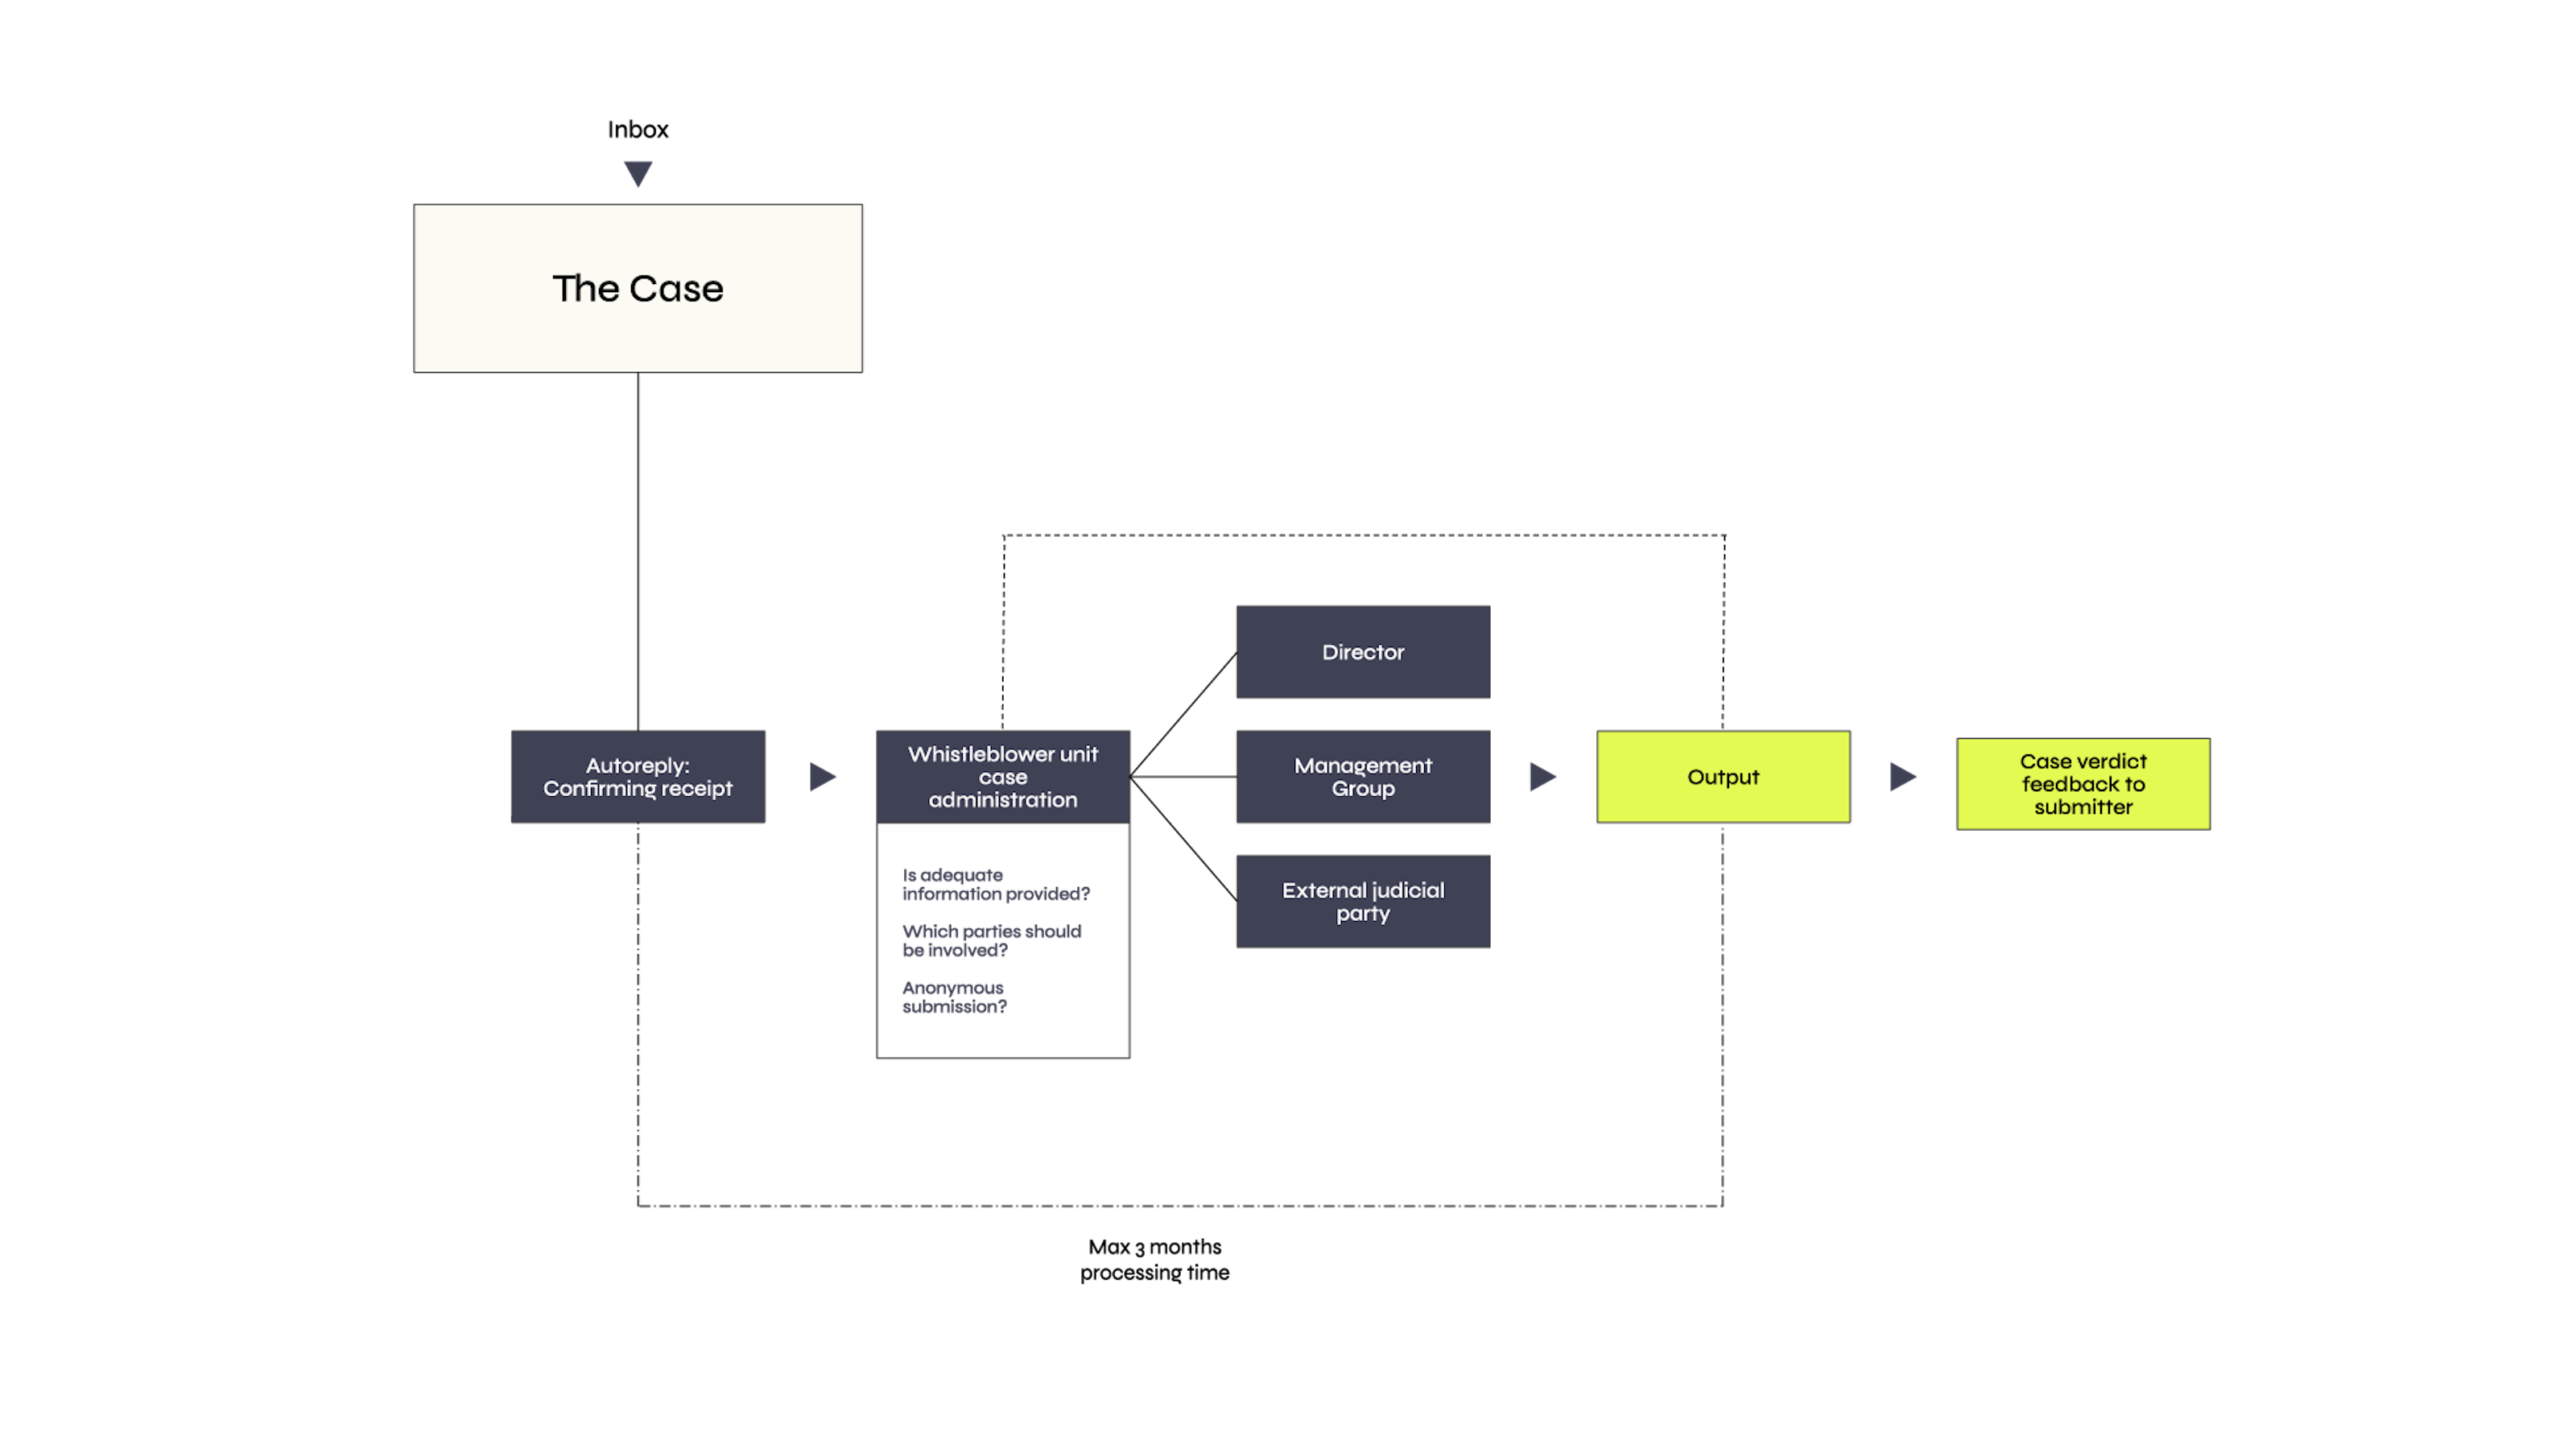 Case process visualized